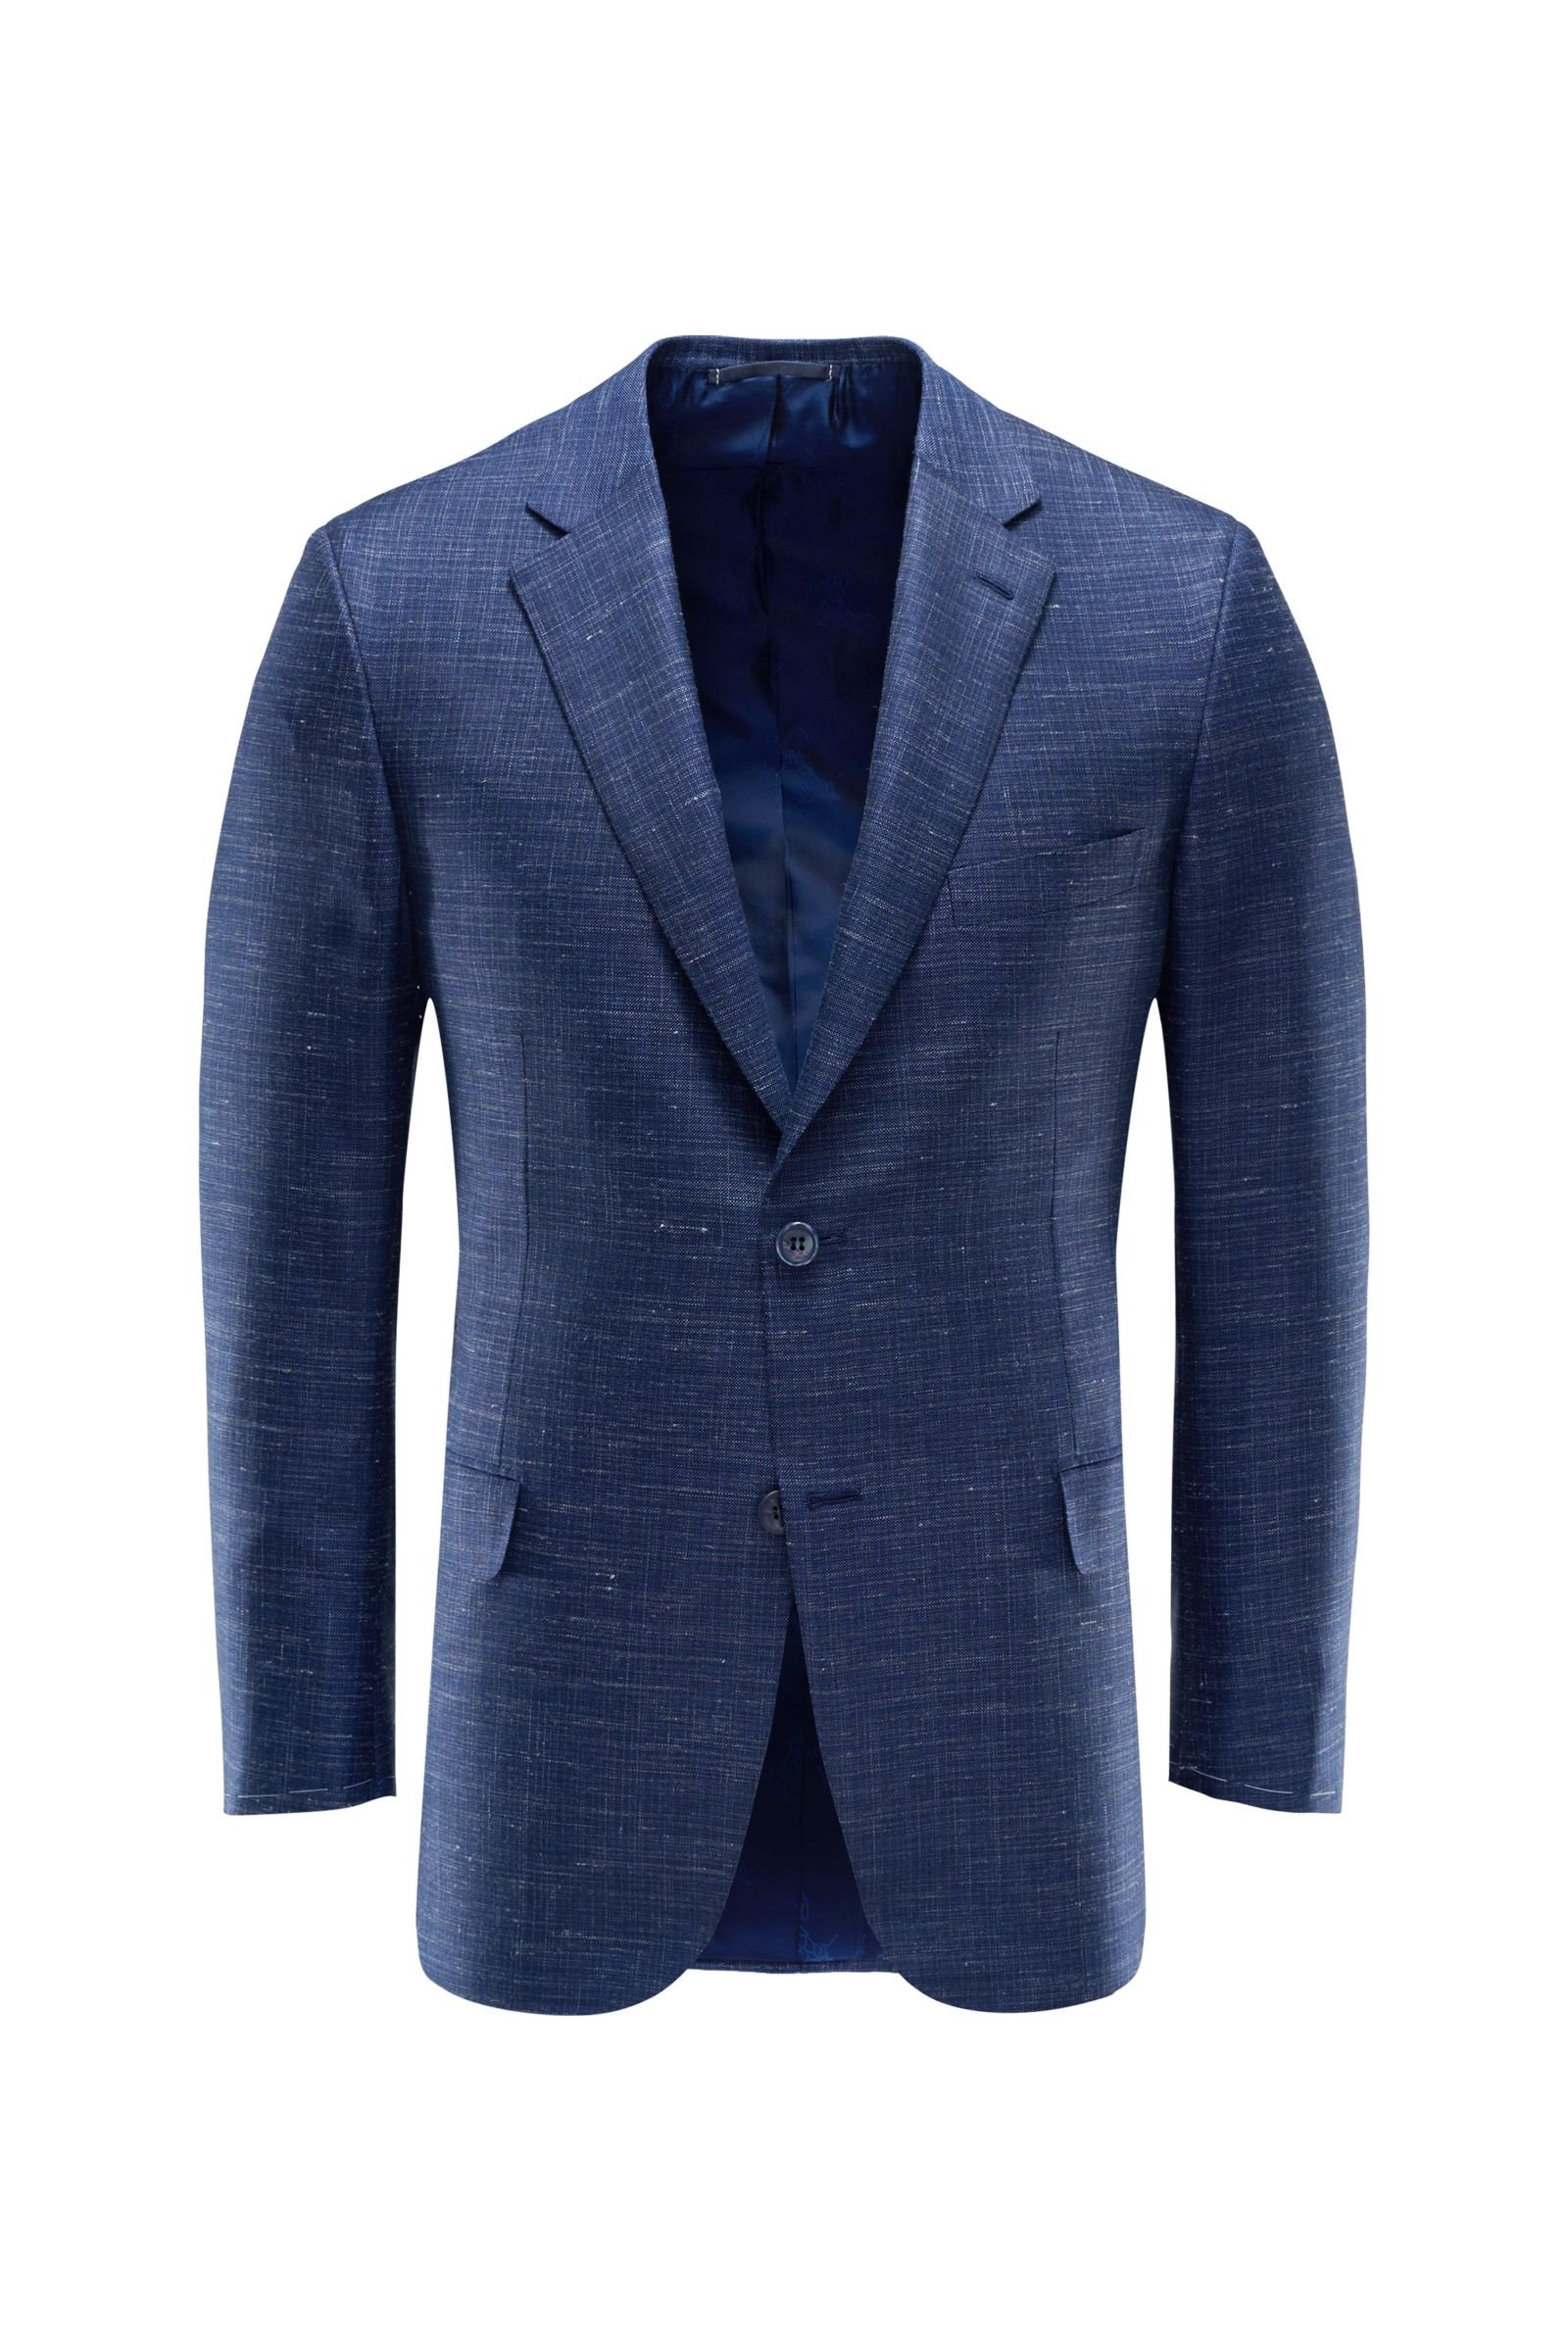 Smart-casual jacket 'Ravello' grey-blue